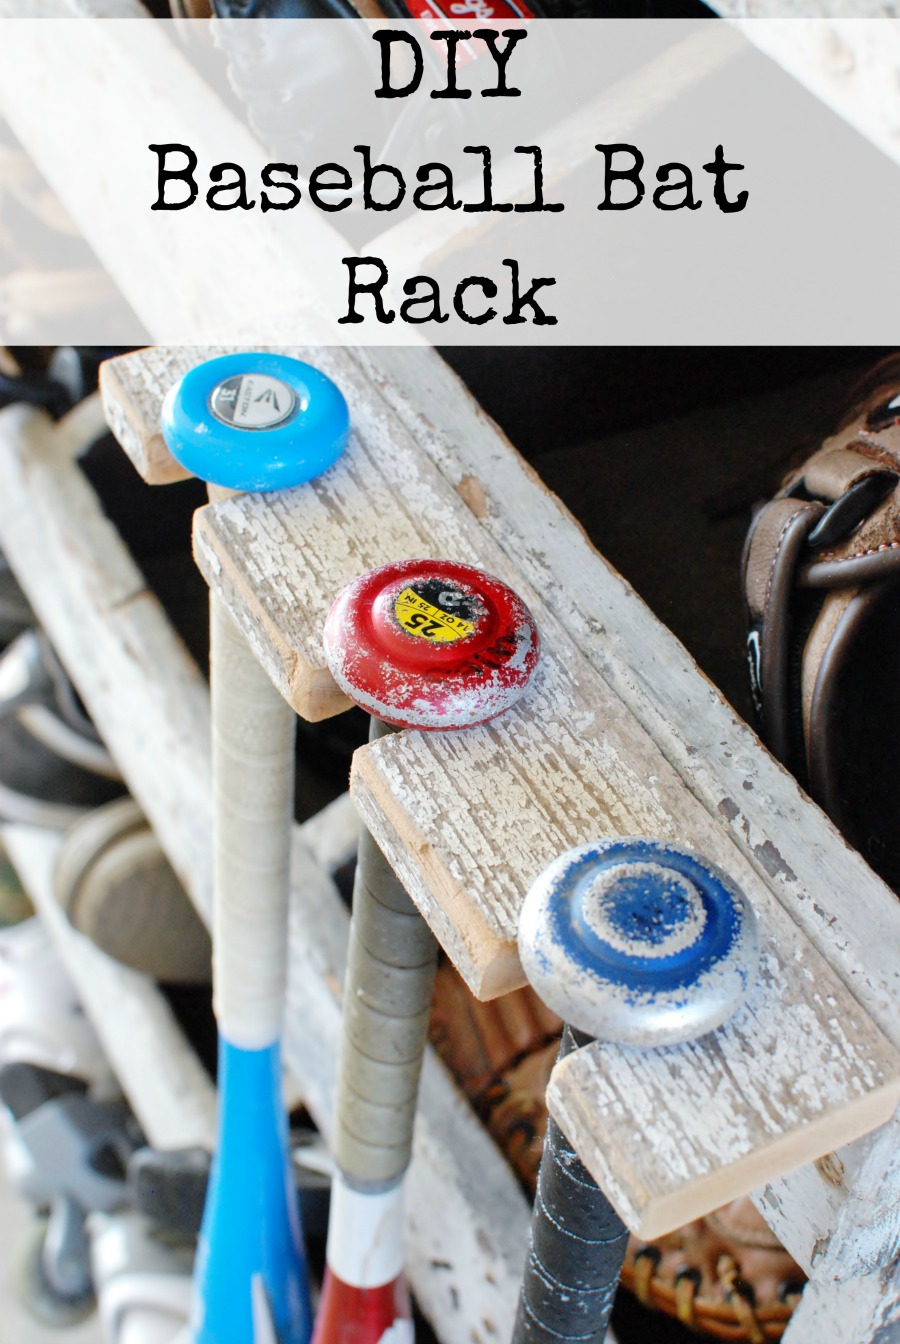 Diy Baseball Bat Rack Storage Solution, Baseball Bat Storage Ideas